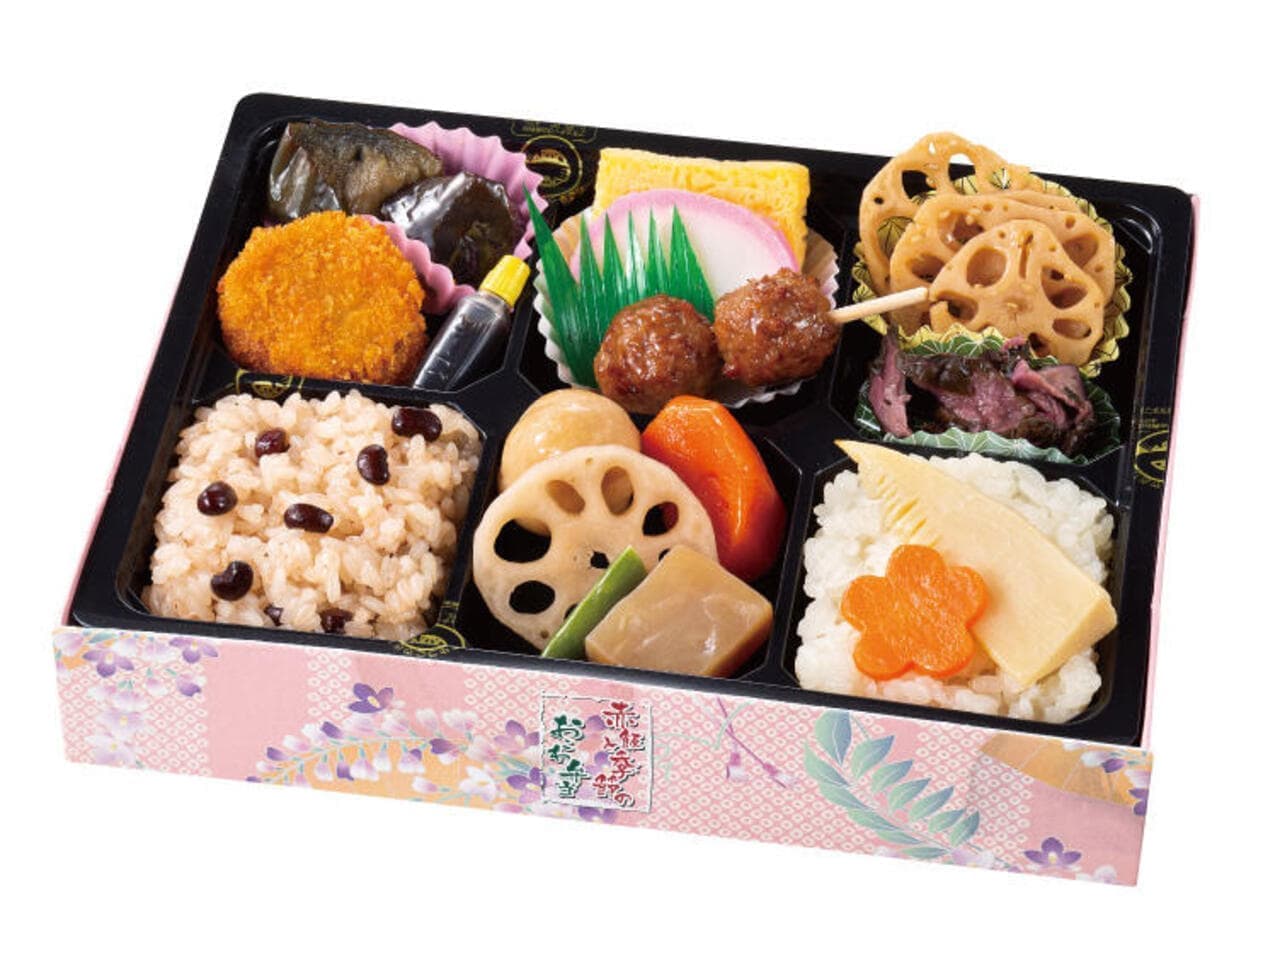 Tokyo Dome "Akahan and Seasonal Okowa Lunchbox